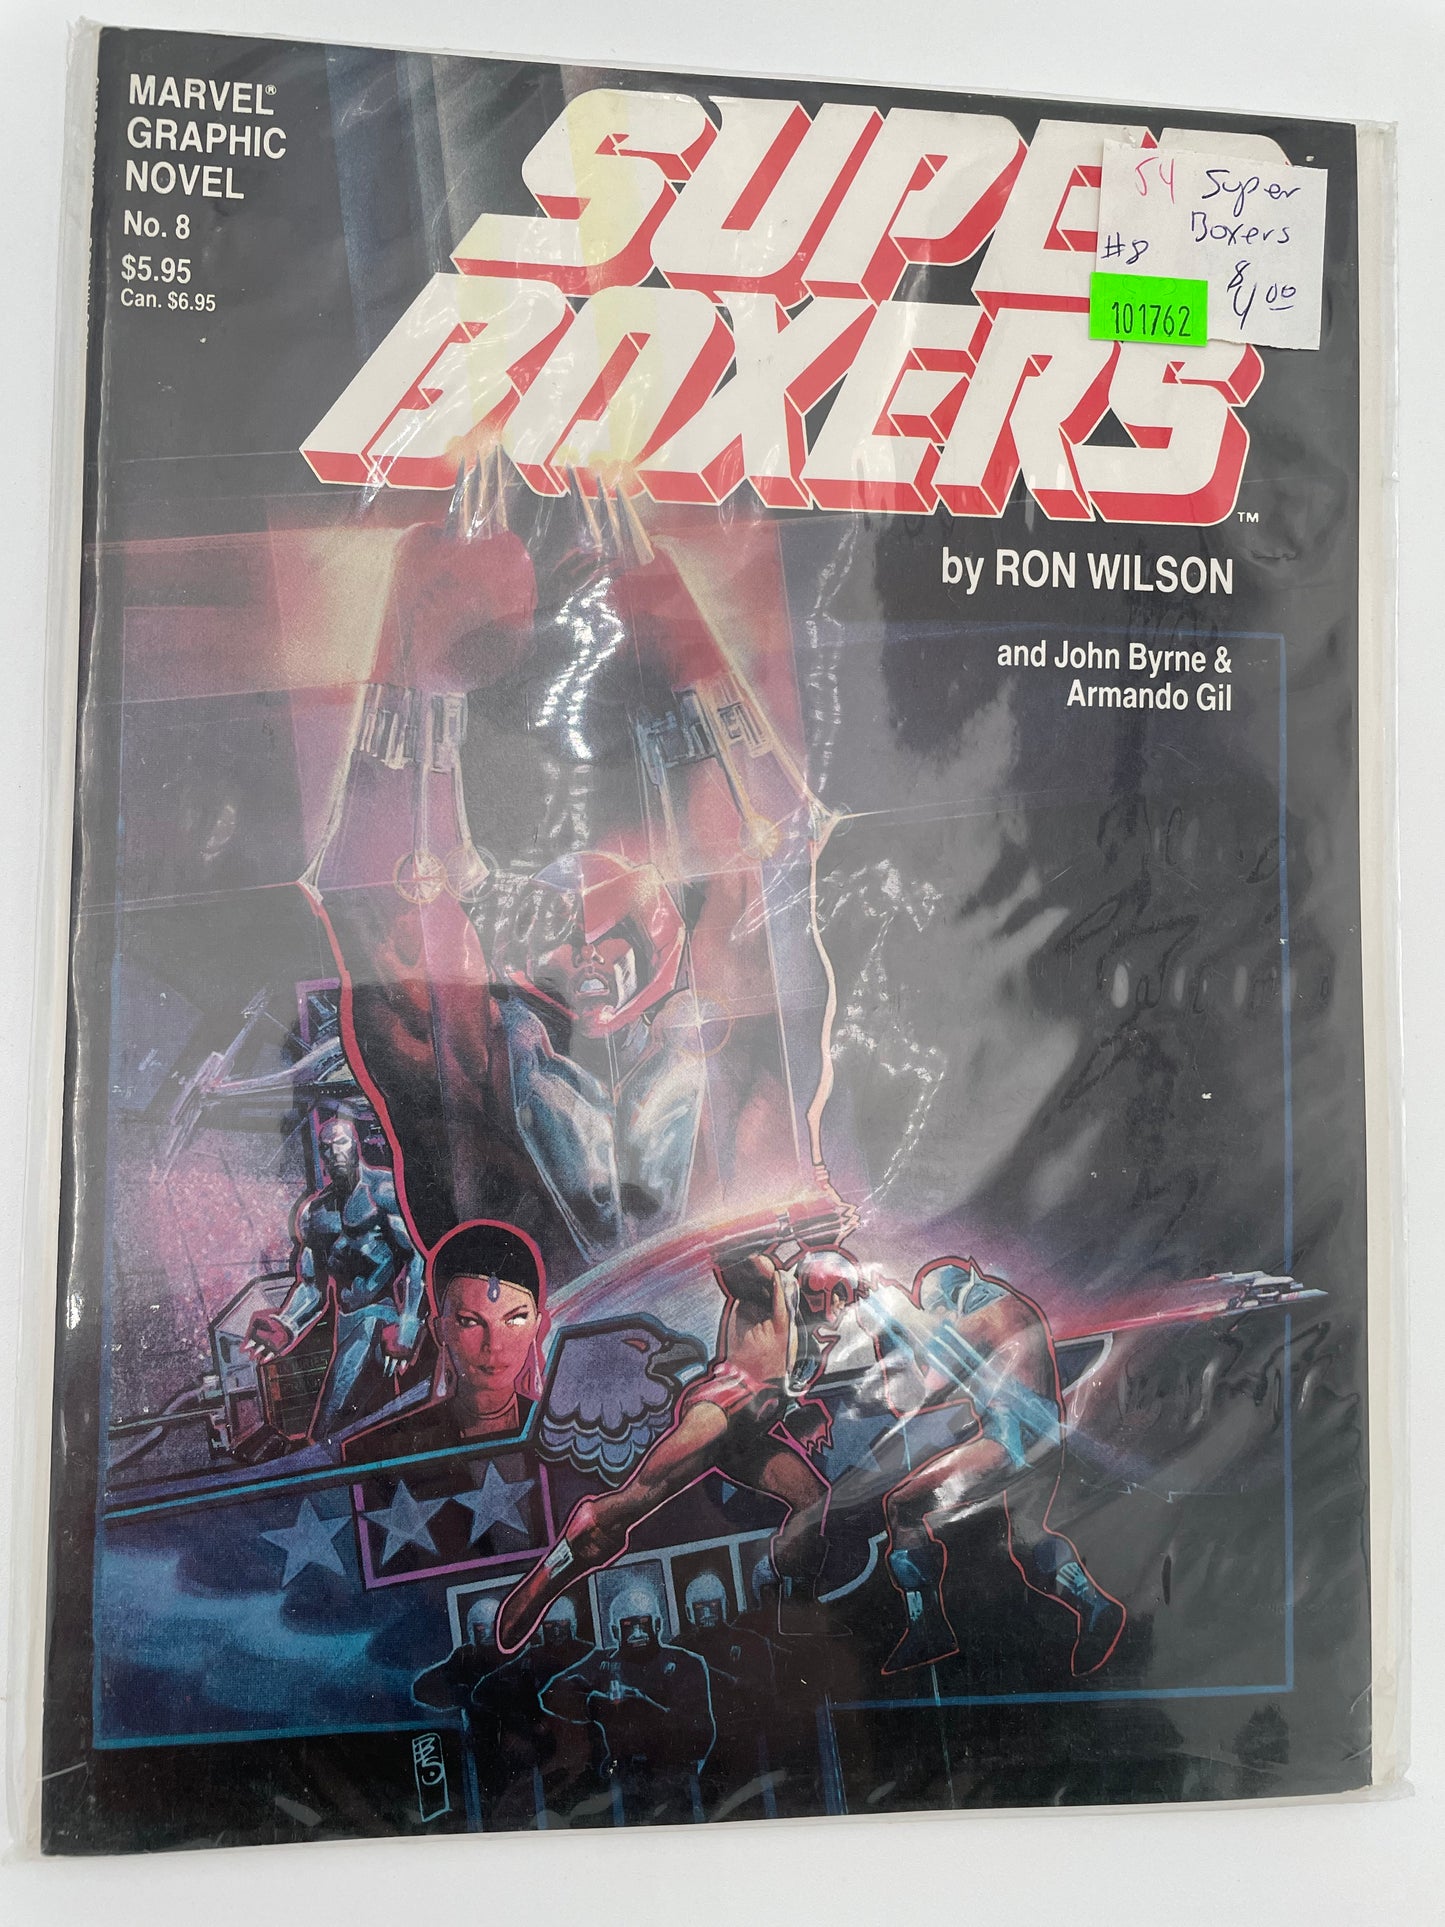 Marvel Graphic Novel - Super Boxers No 8 - #101762